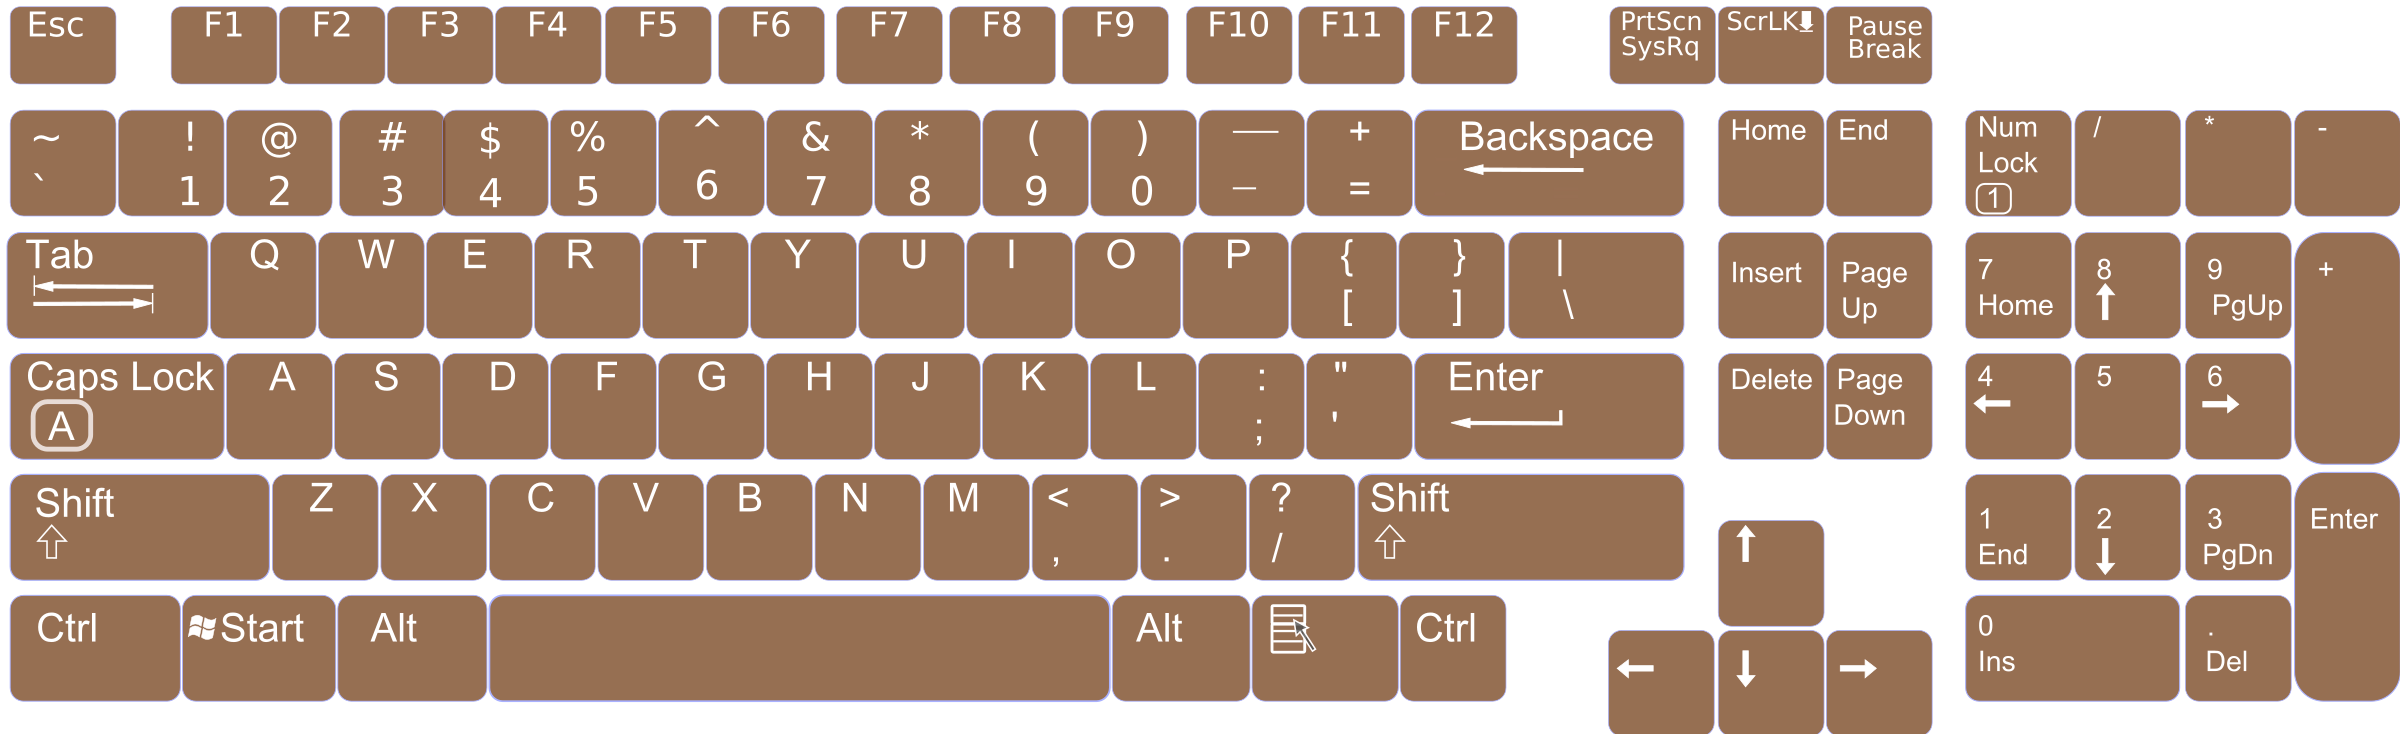 Standard Q W E R T Y Keyboard Layout PNG